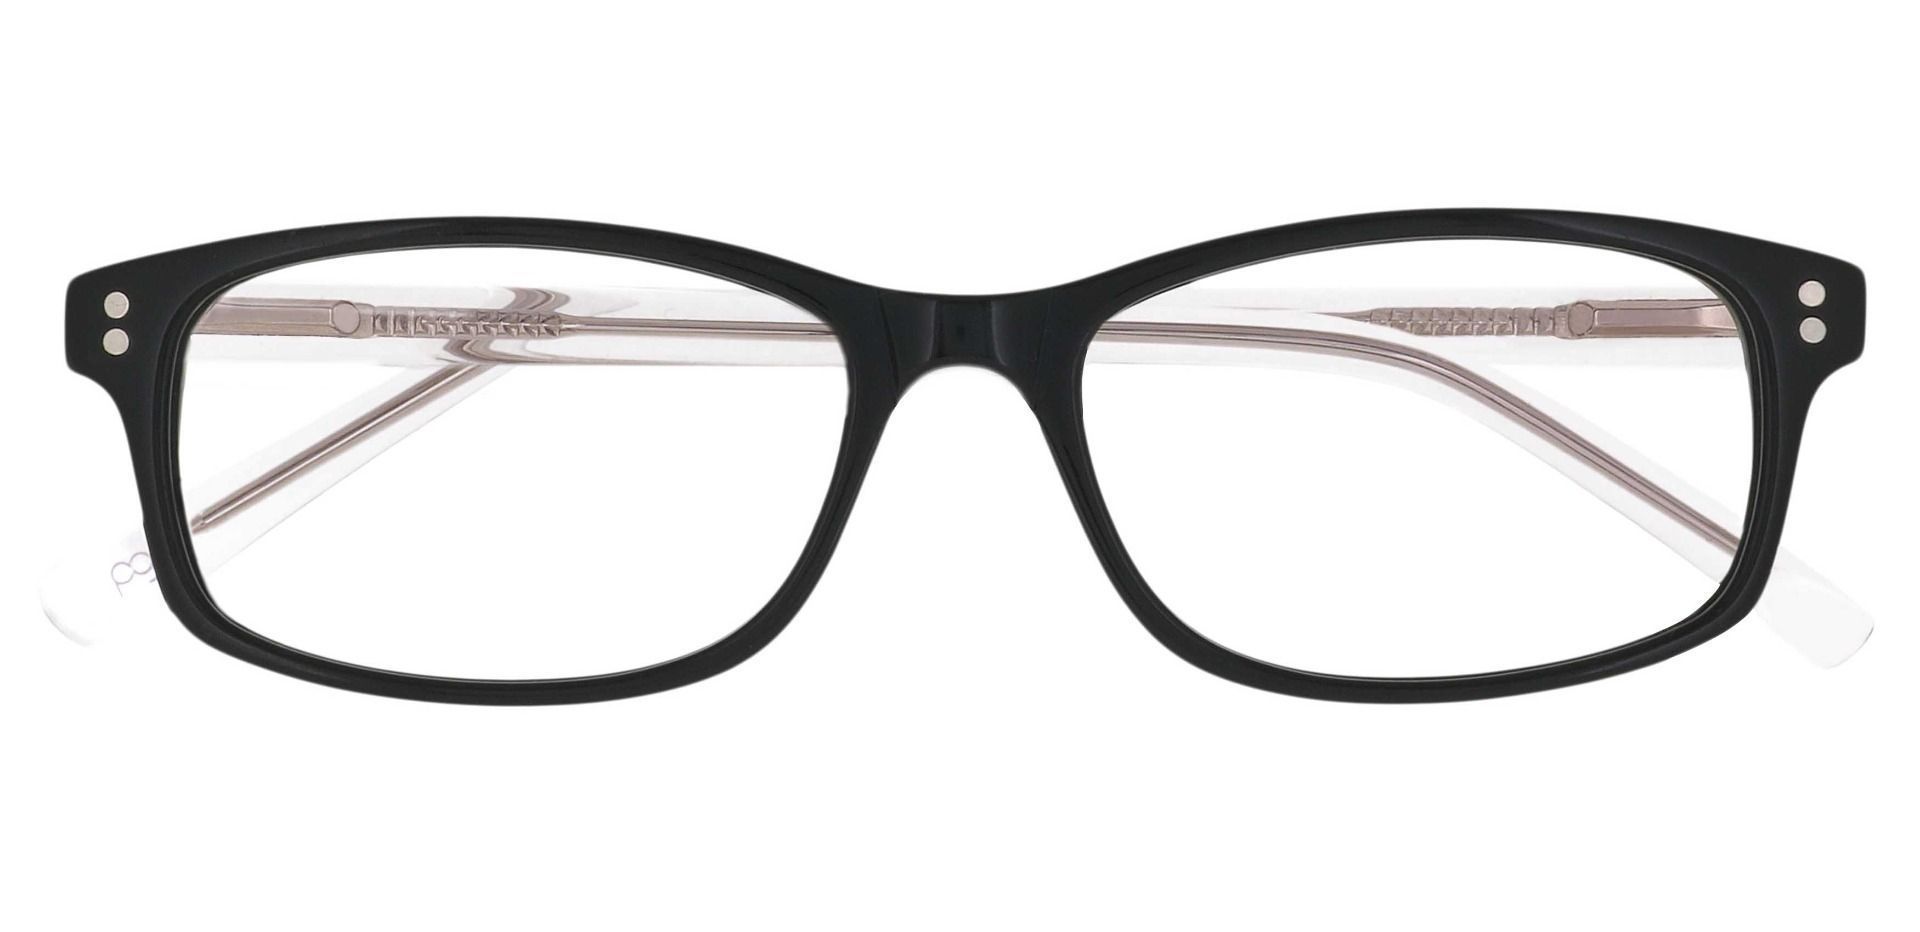 Olmstead Rectangle Eyeglasses Frame - Black